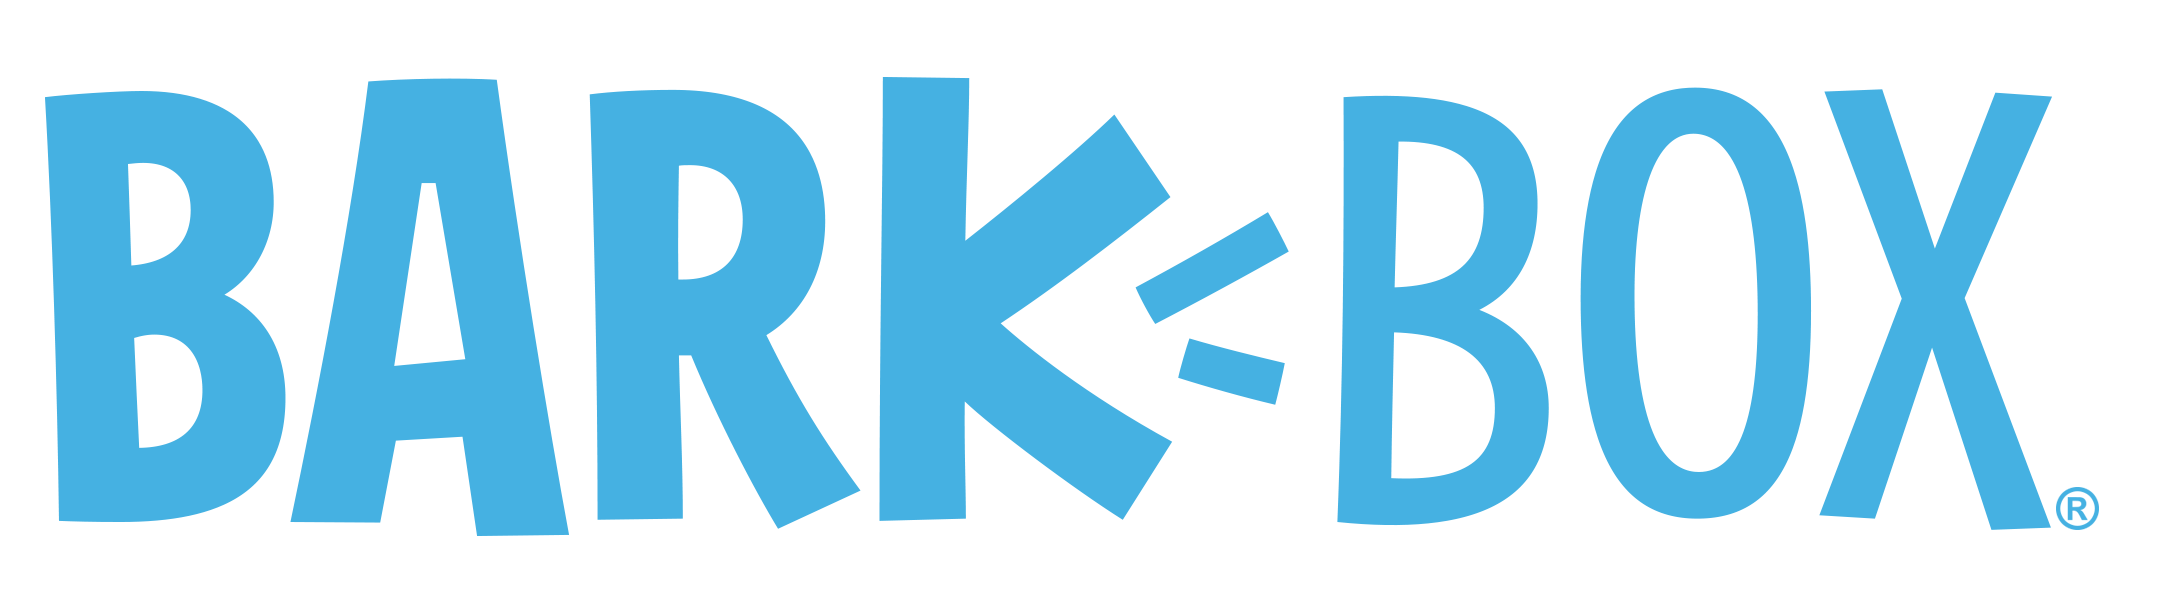 BarkBox_logo.png